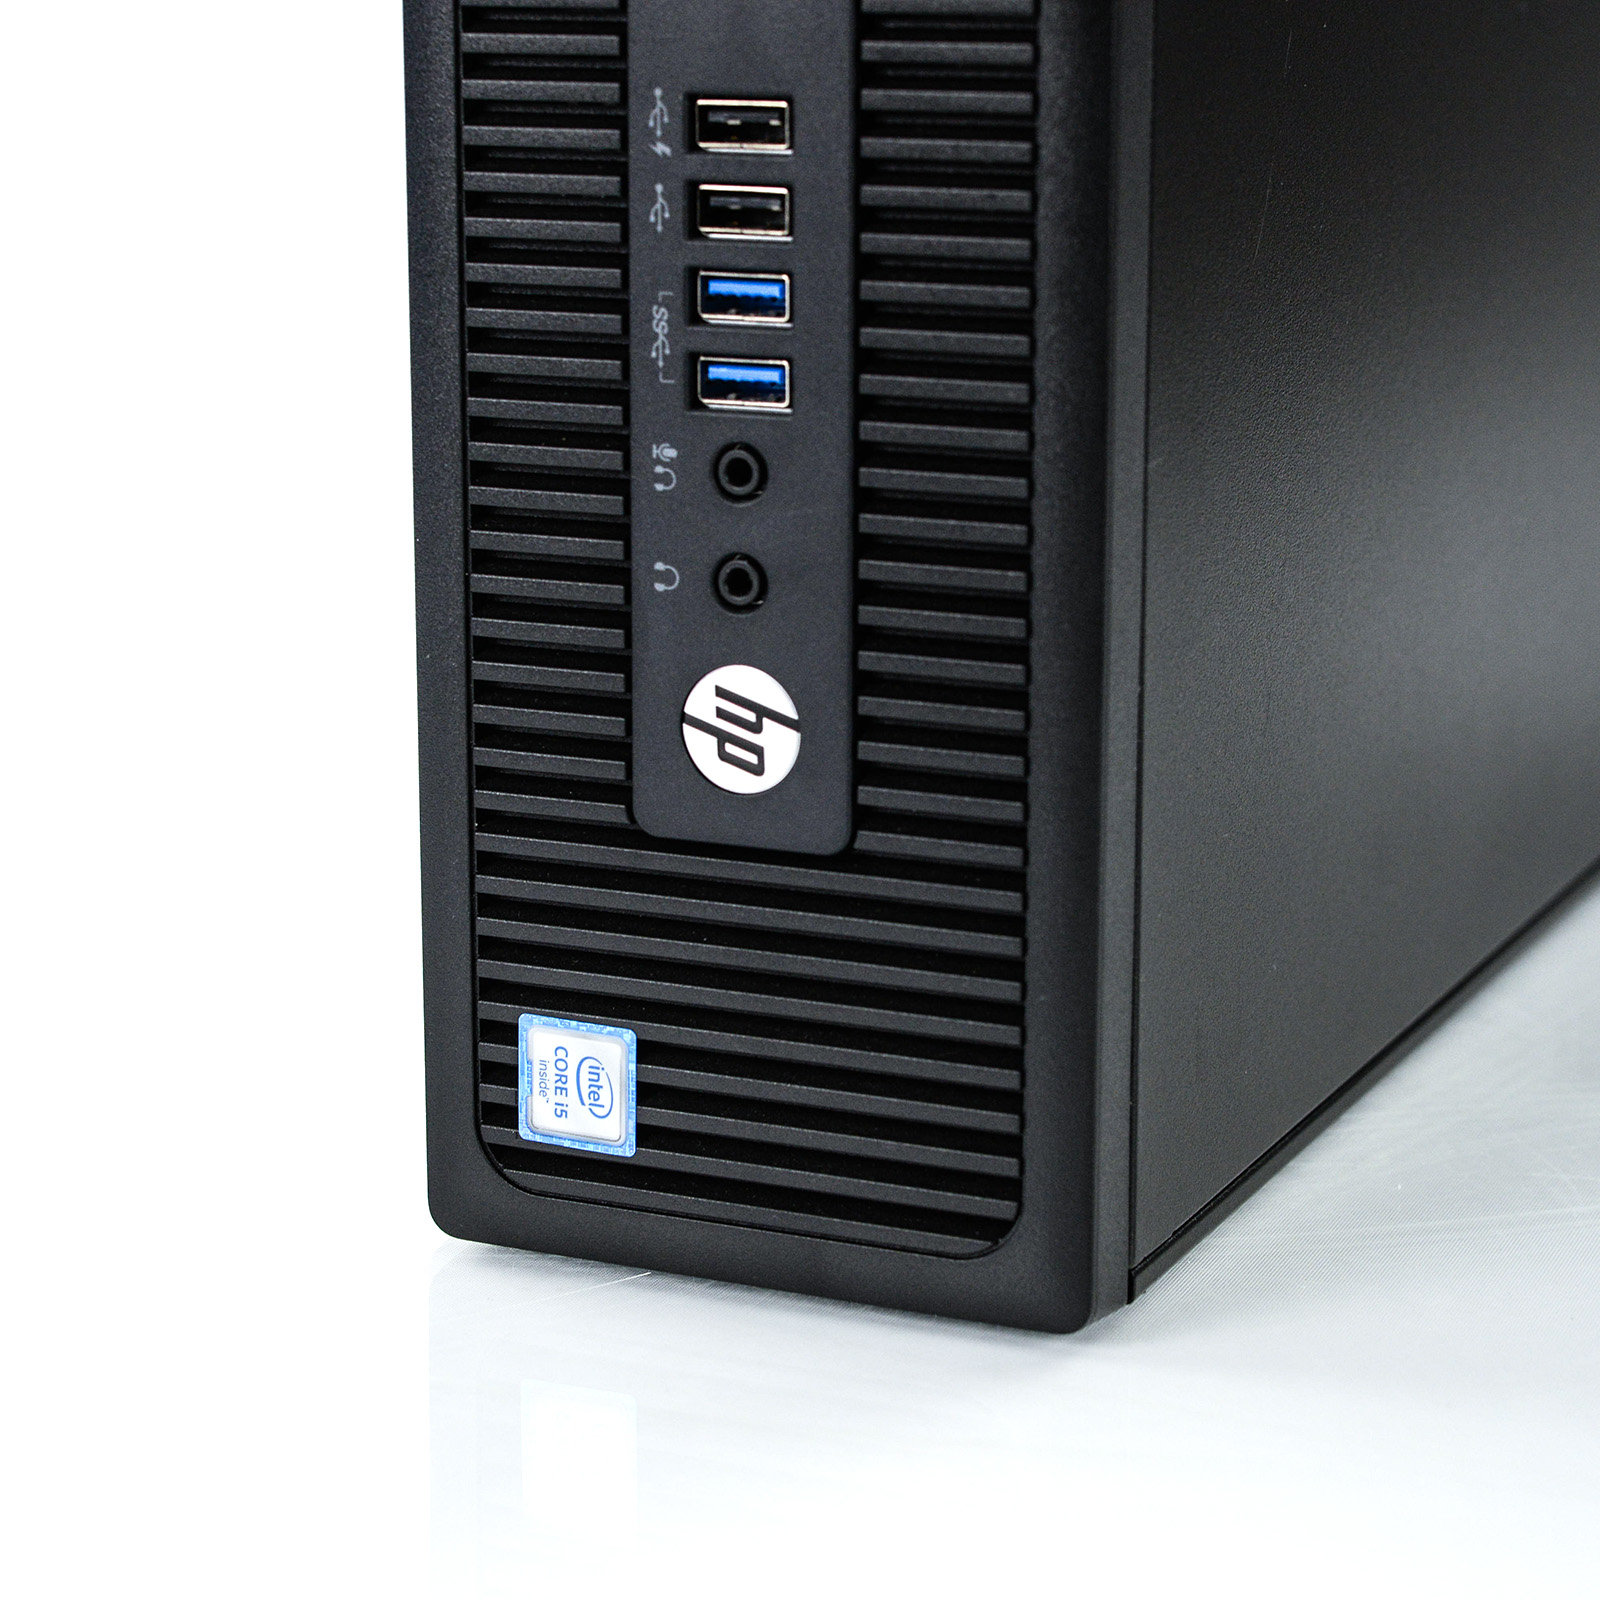 HP ProDesk 600 G2 SF Desktop Tower Computer, Intel Core i5, 8GB RAM, 256GB SSD, Windows 10 Pro, Black (Used) - image 3 of 6